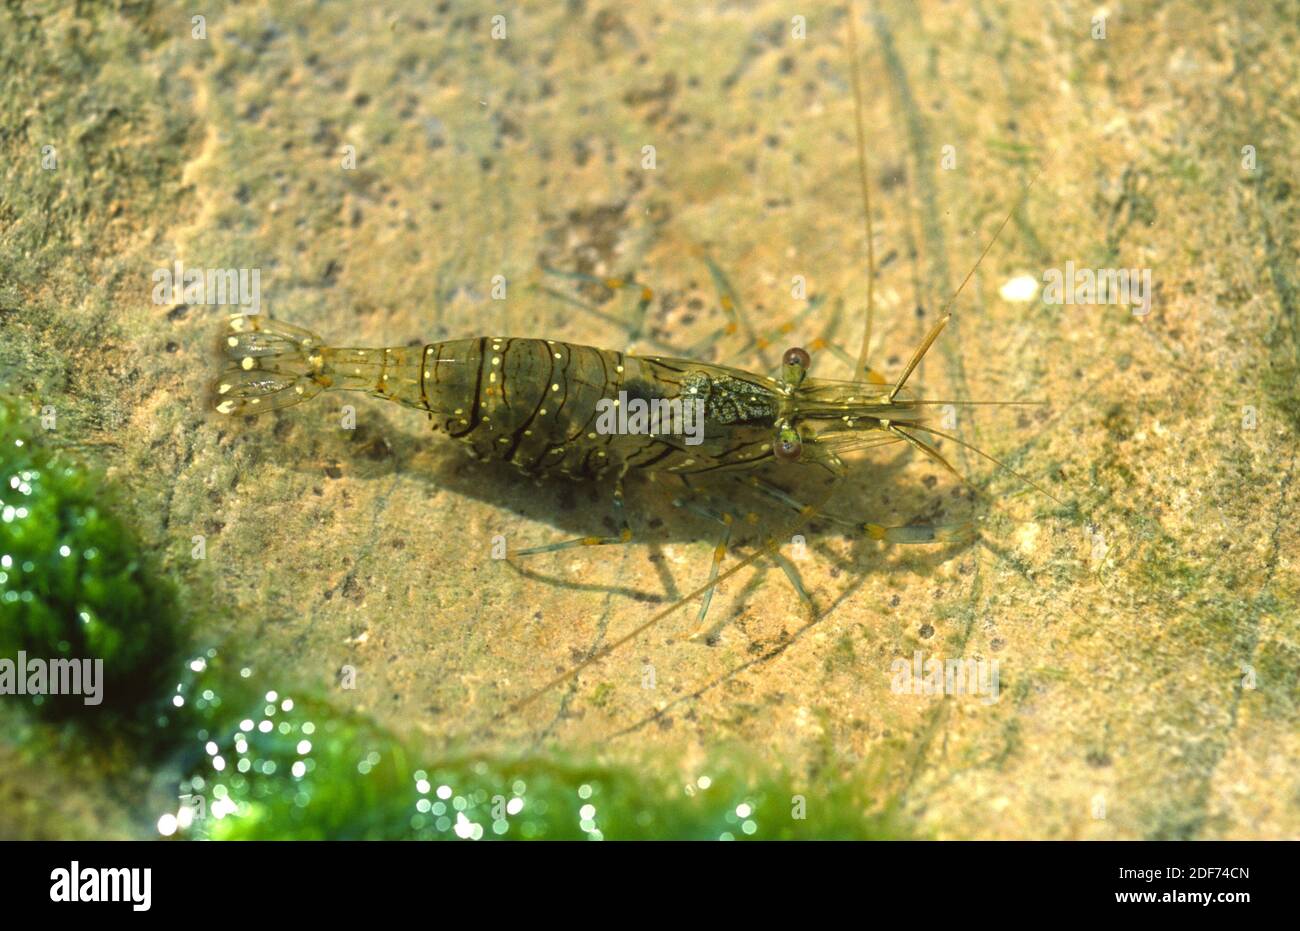 Rockpool shrimp (Palaemon elegans) is an edible crustacean native to Mediterranean and Atlantic coasts. Stock Photo